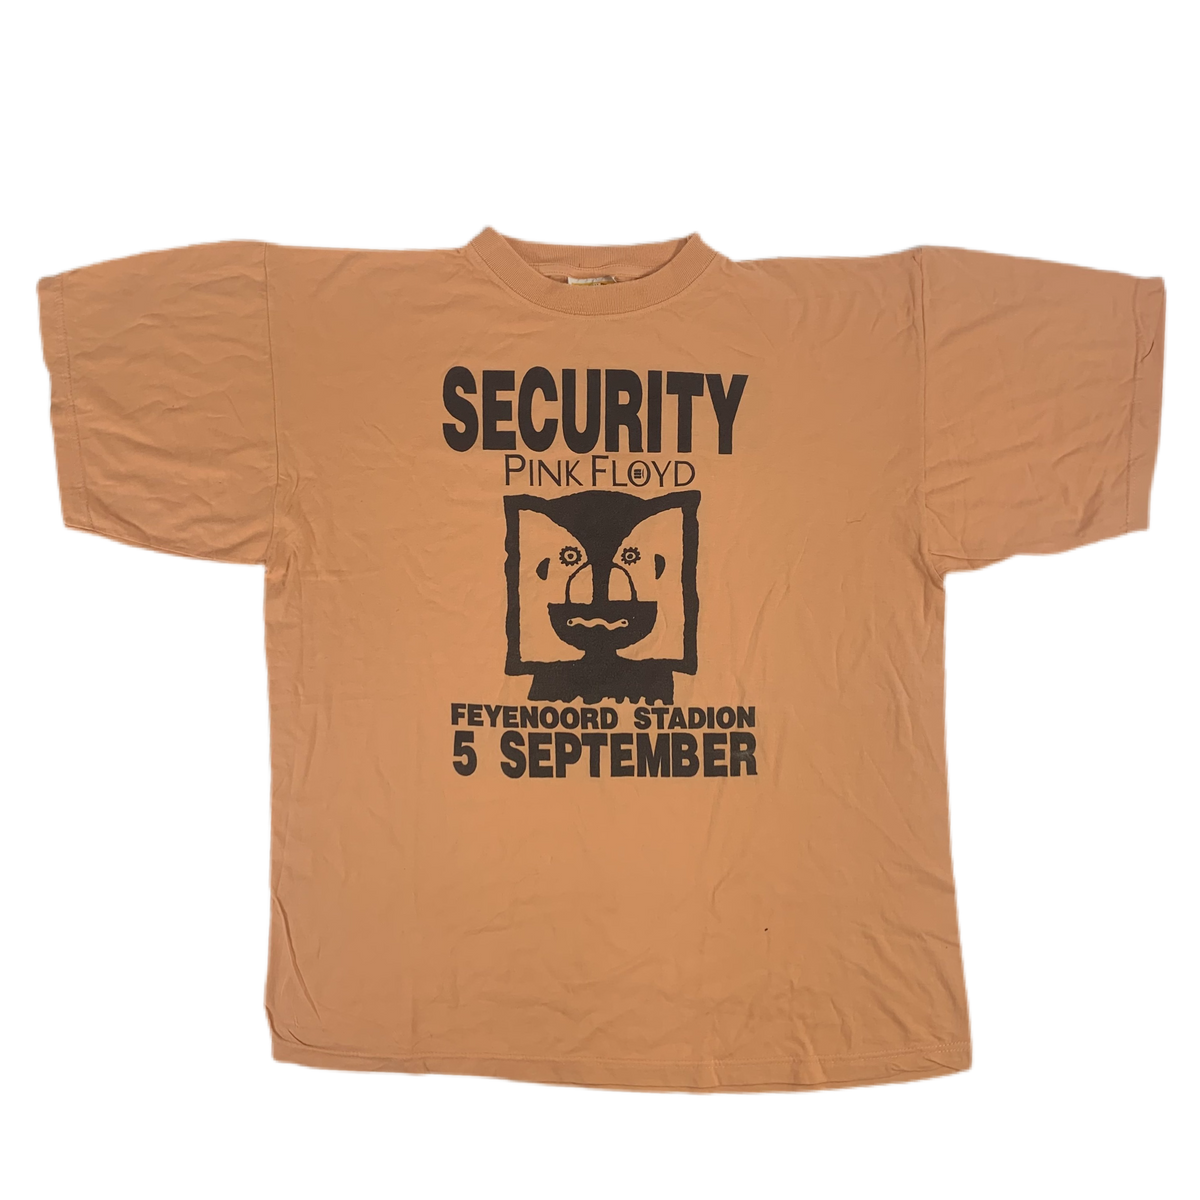 Vintage Pink Floyd “SECURITY” T-Shirt